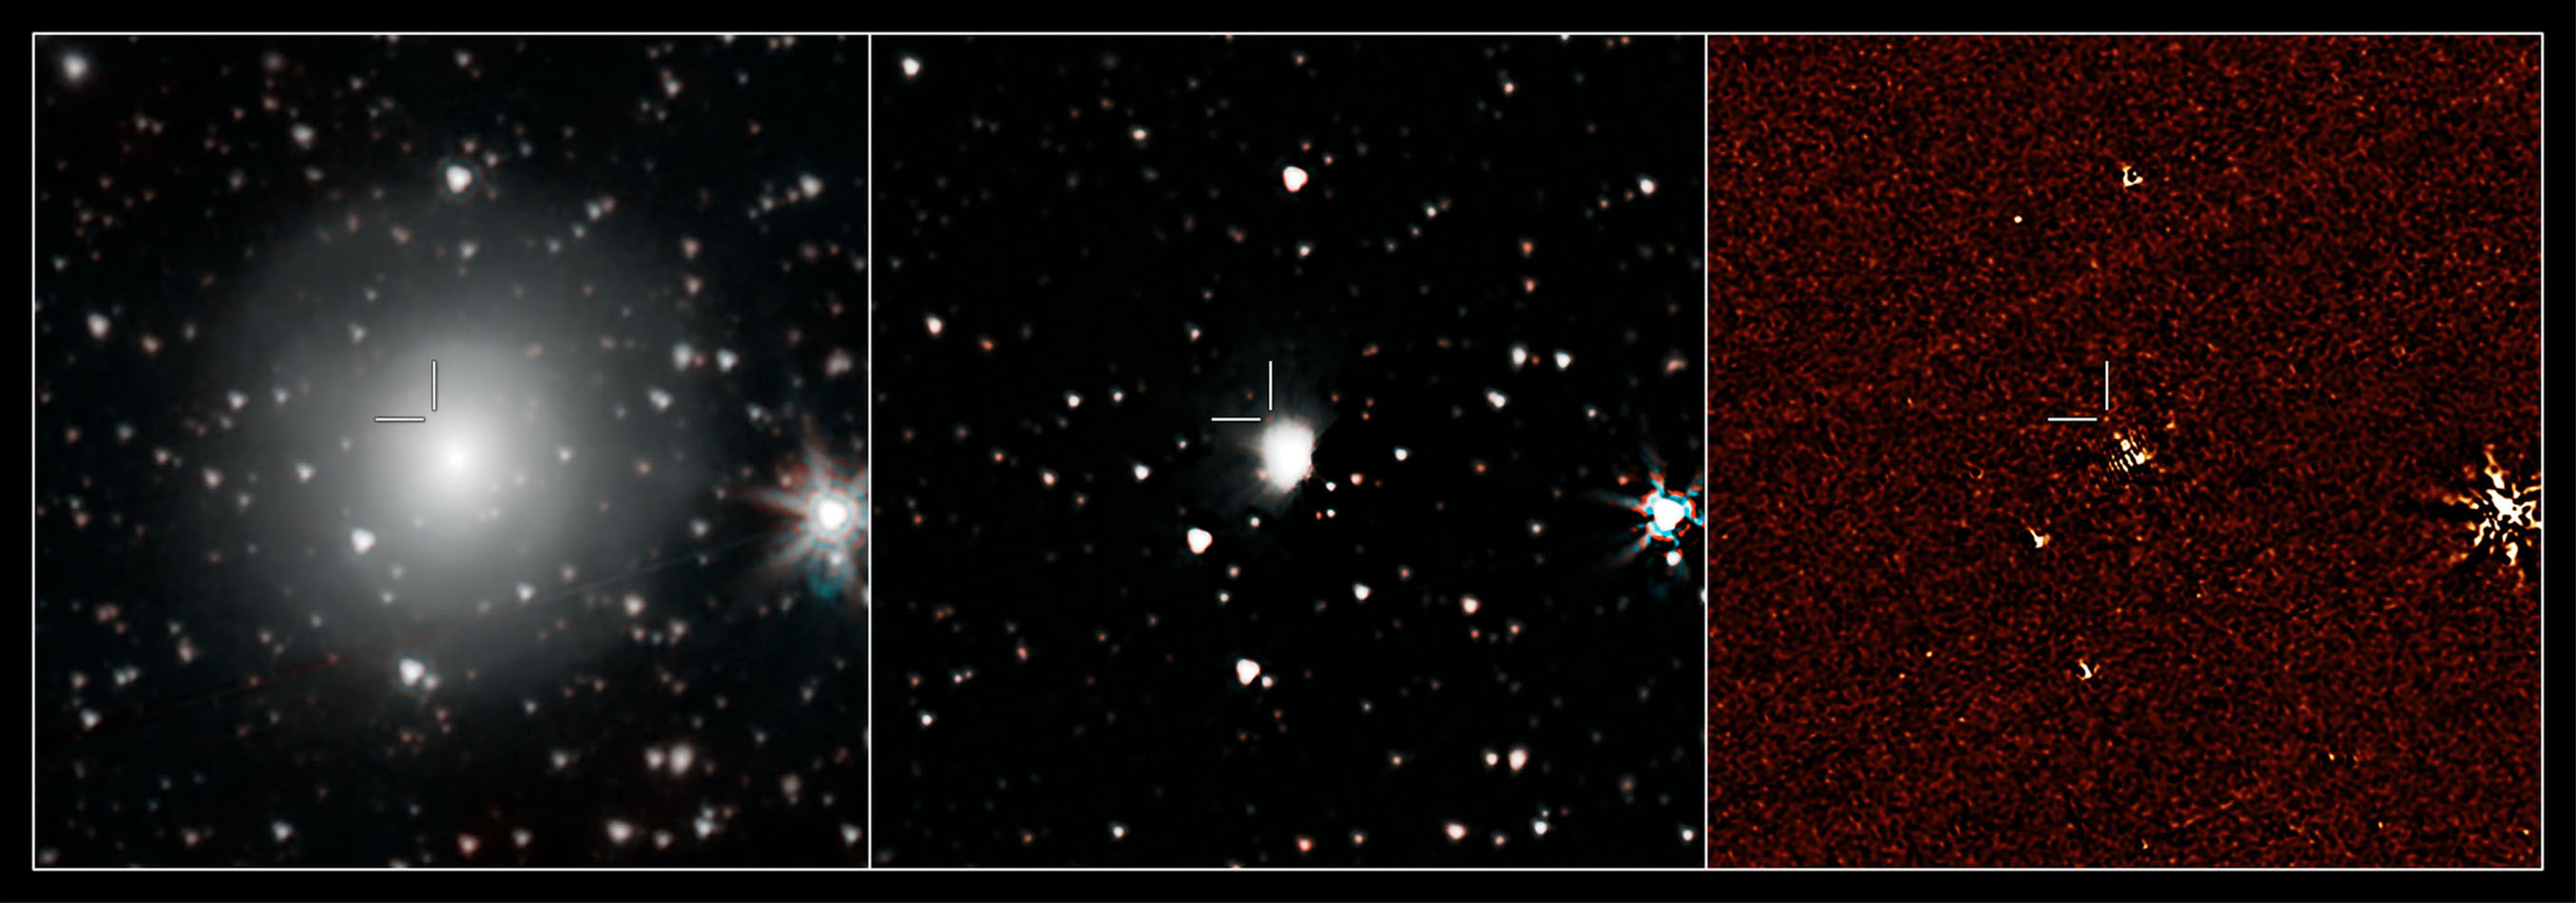 Space Image Spitzer Observes Neutron Star Collision